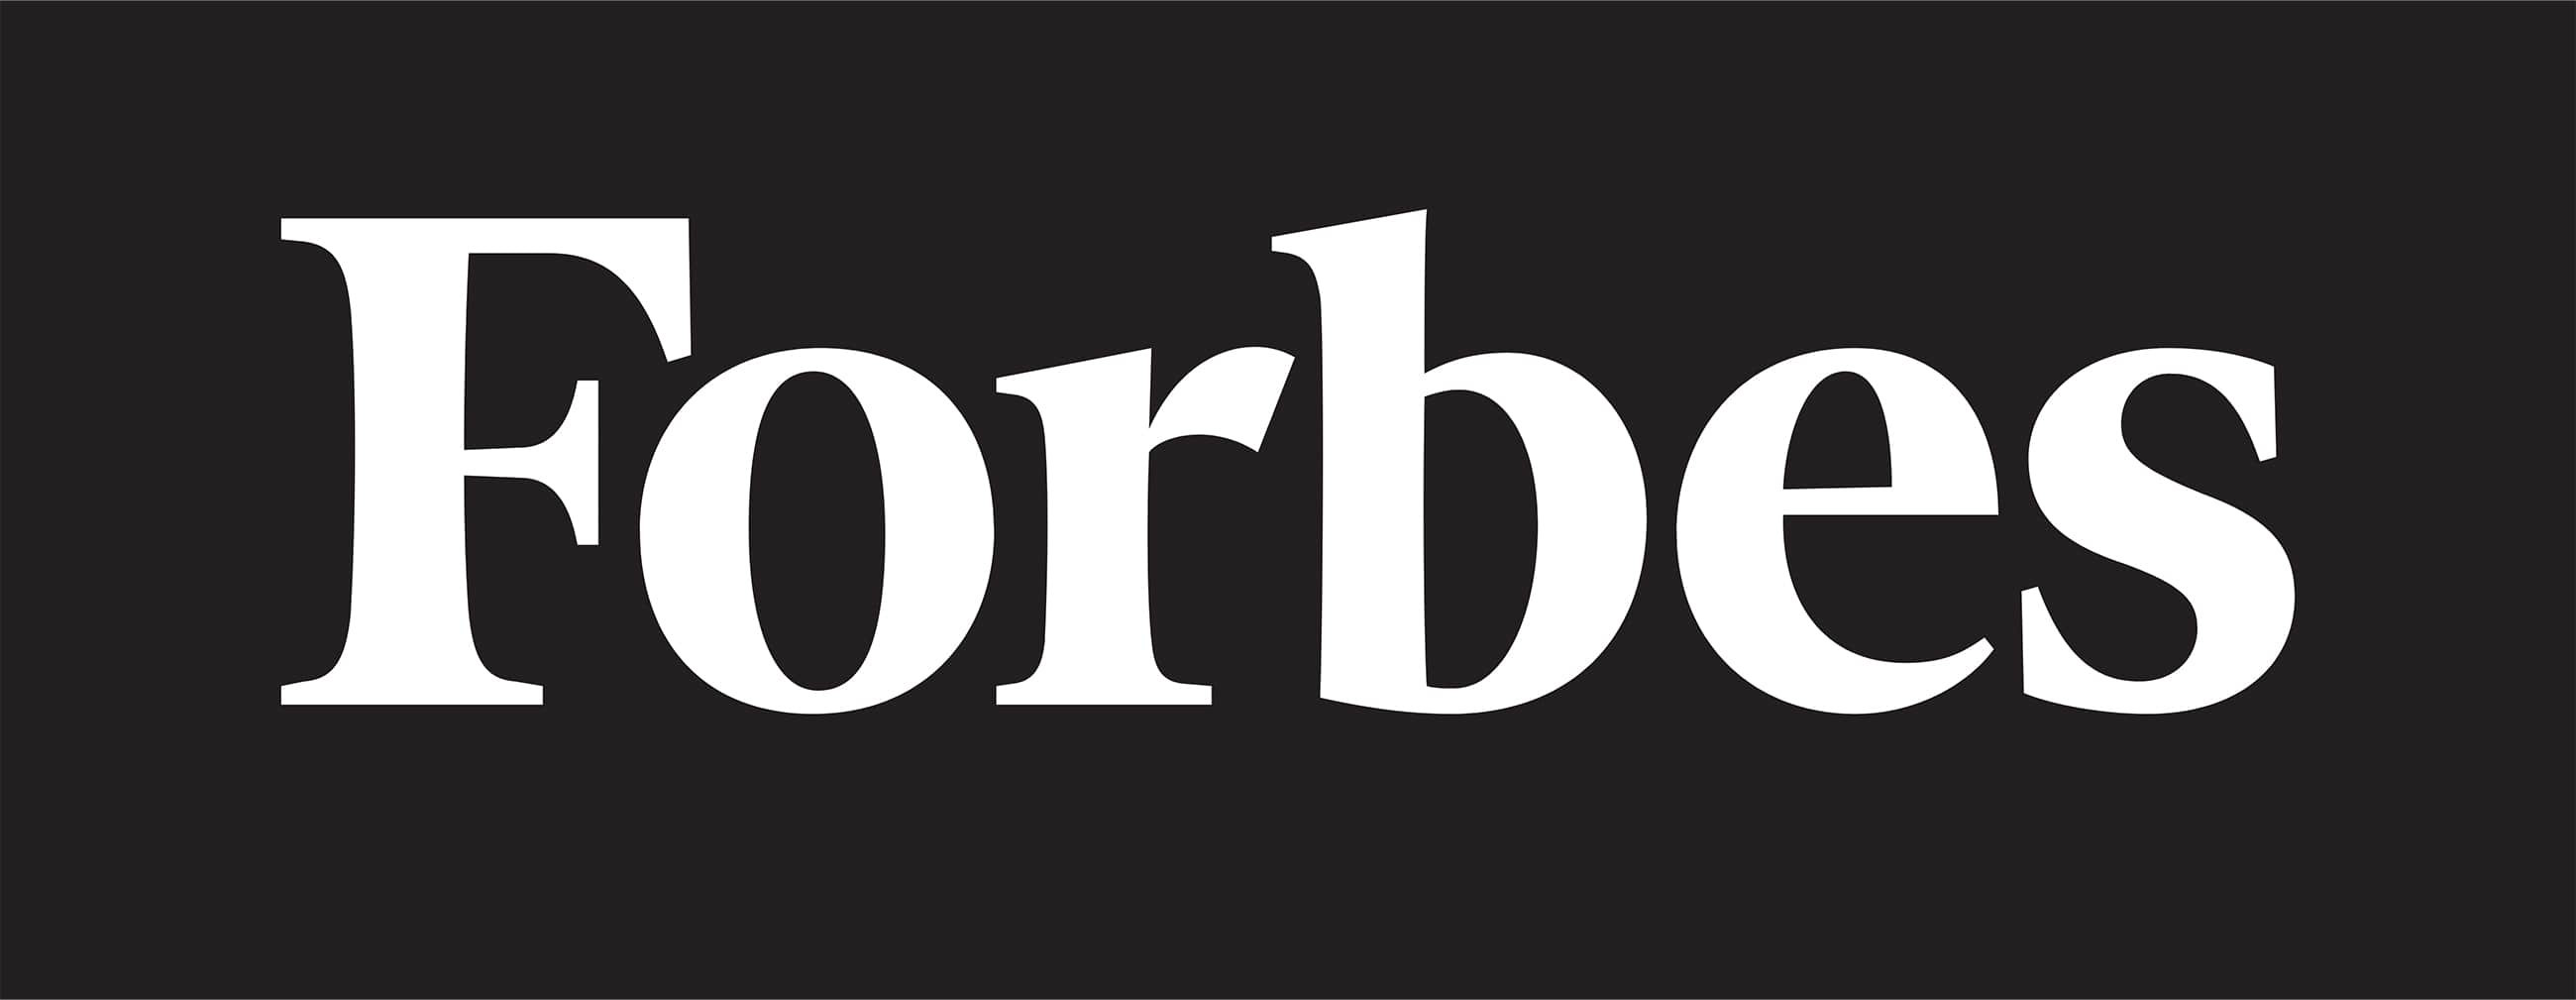 Forbes_logo_black7654-1.jpg